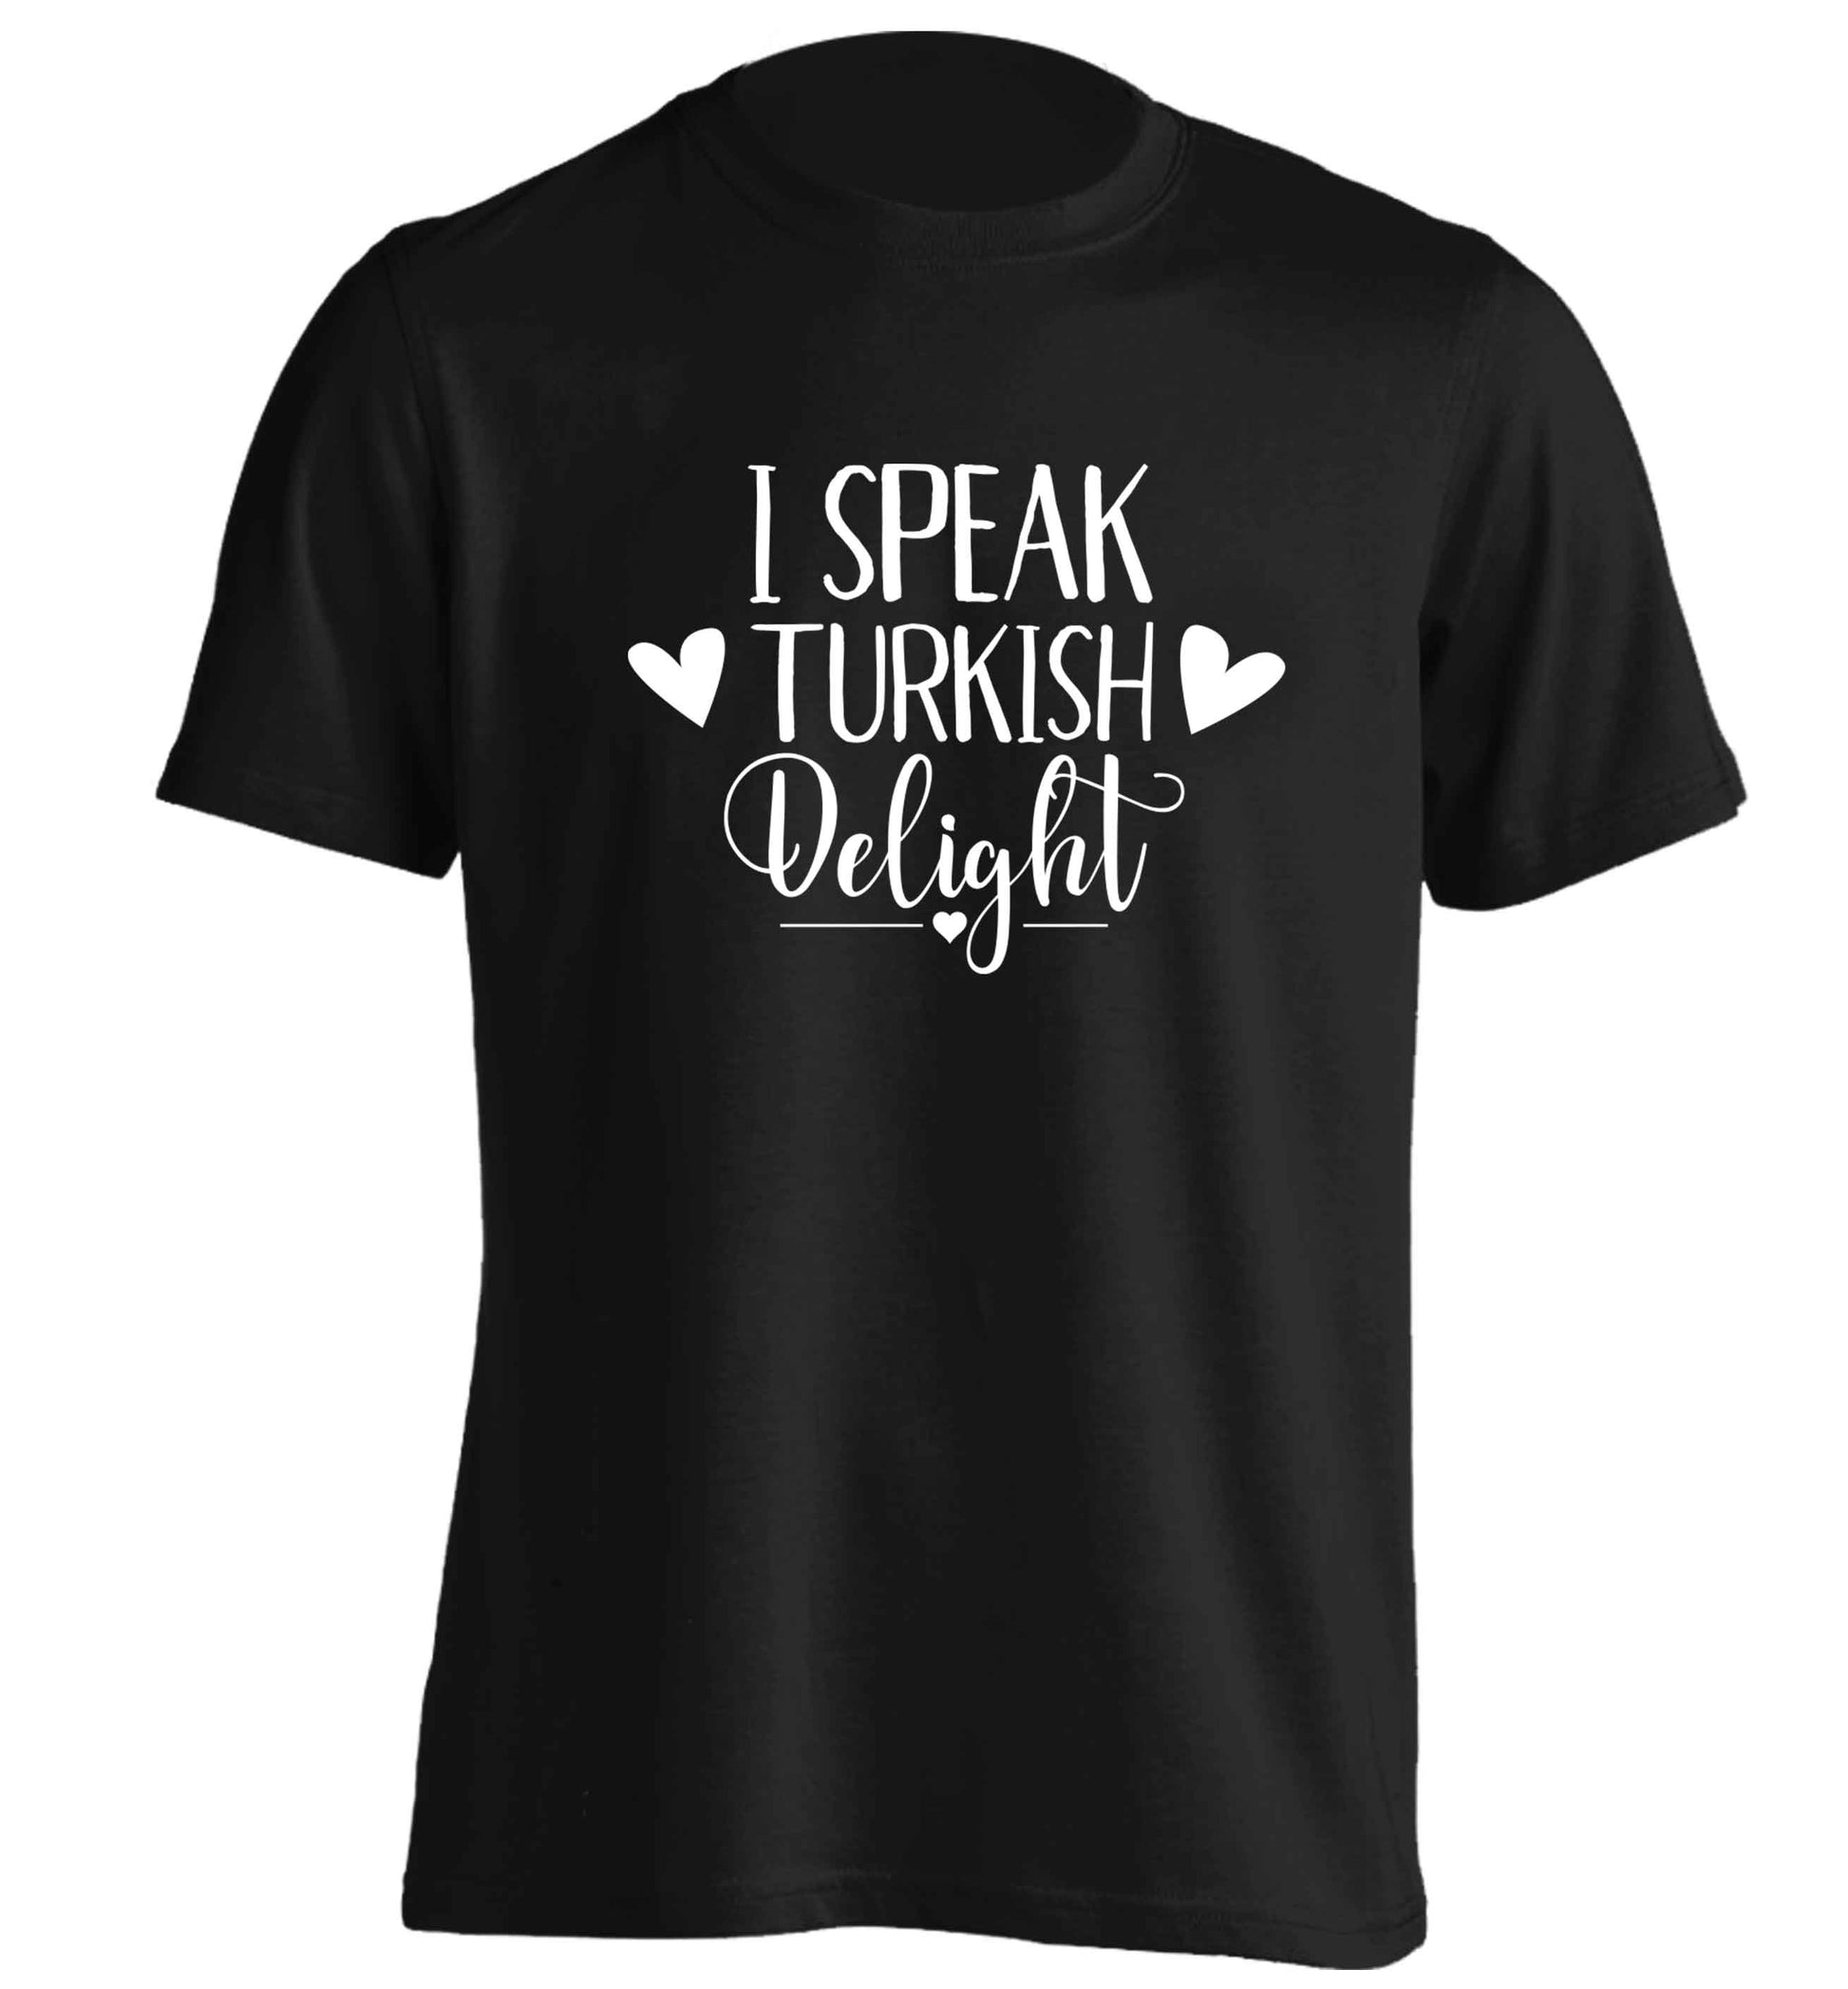 I speak turkish...delight adults unisex black Tshirt 2XL